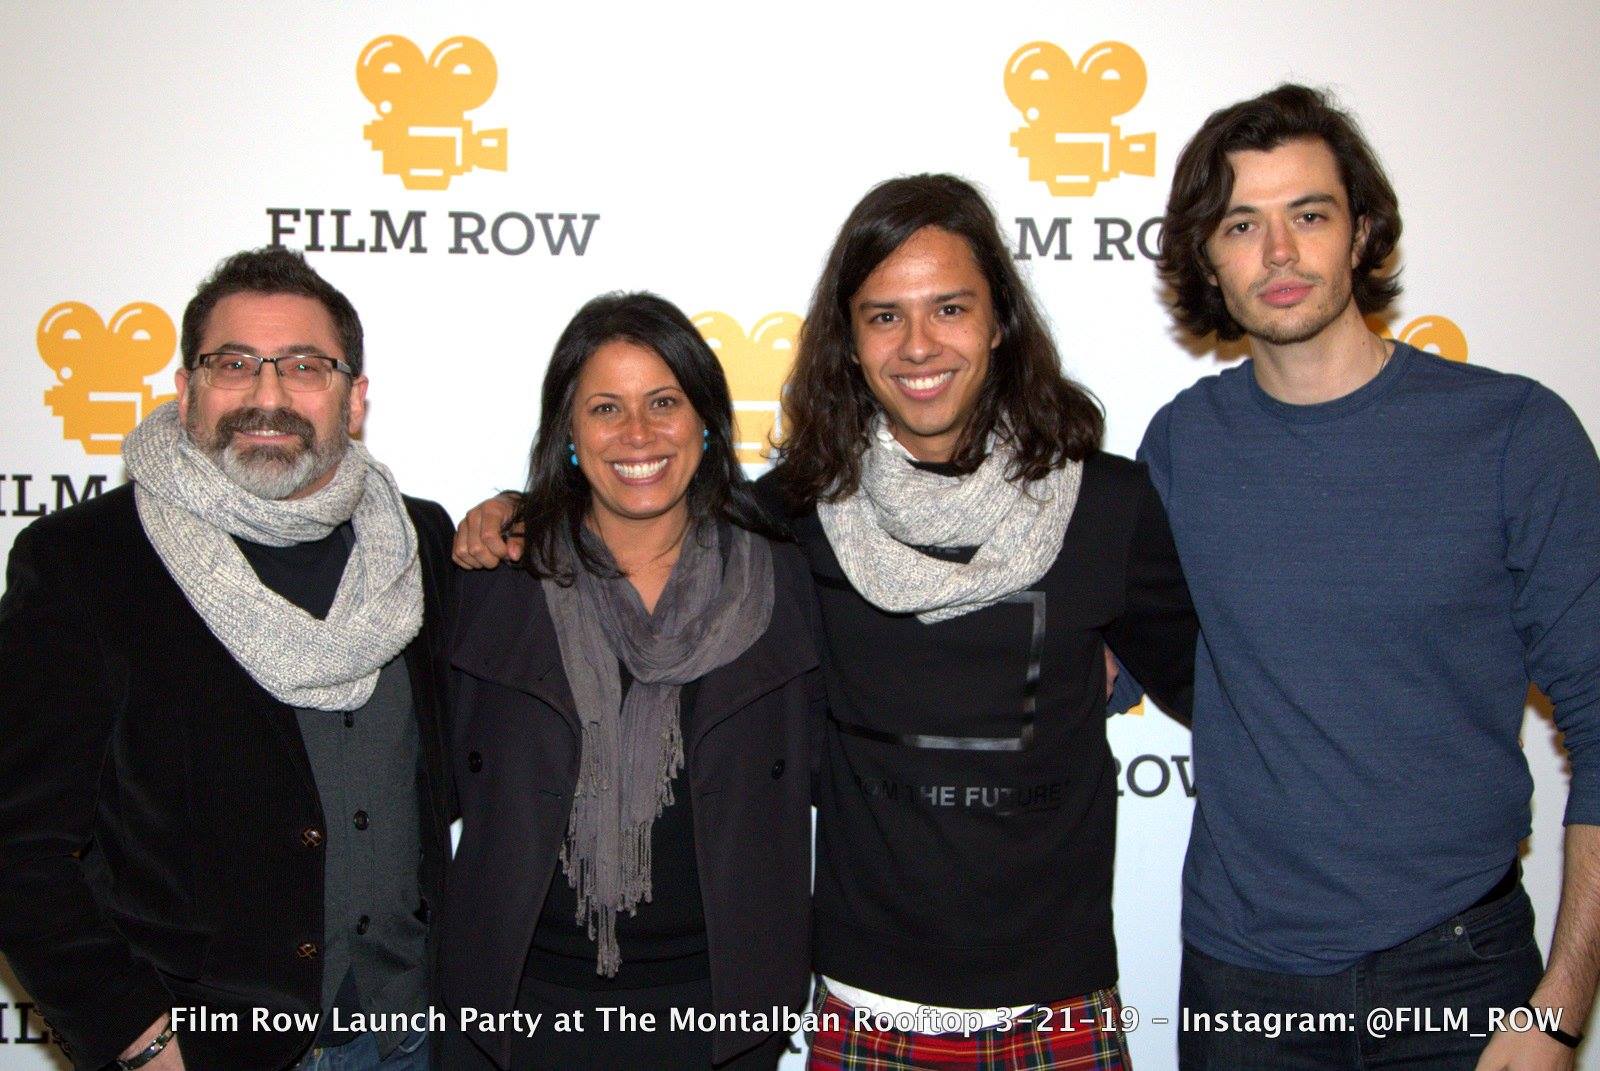 Film Row Launch Party. Photo: Debi Dodge